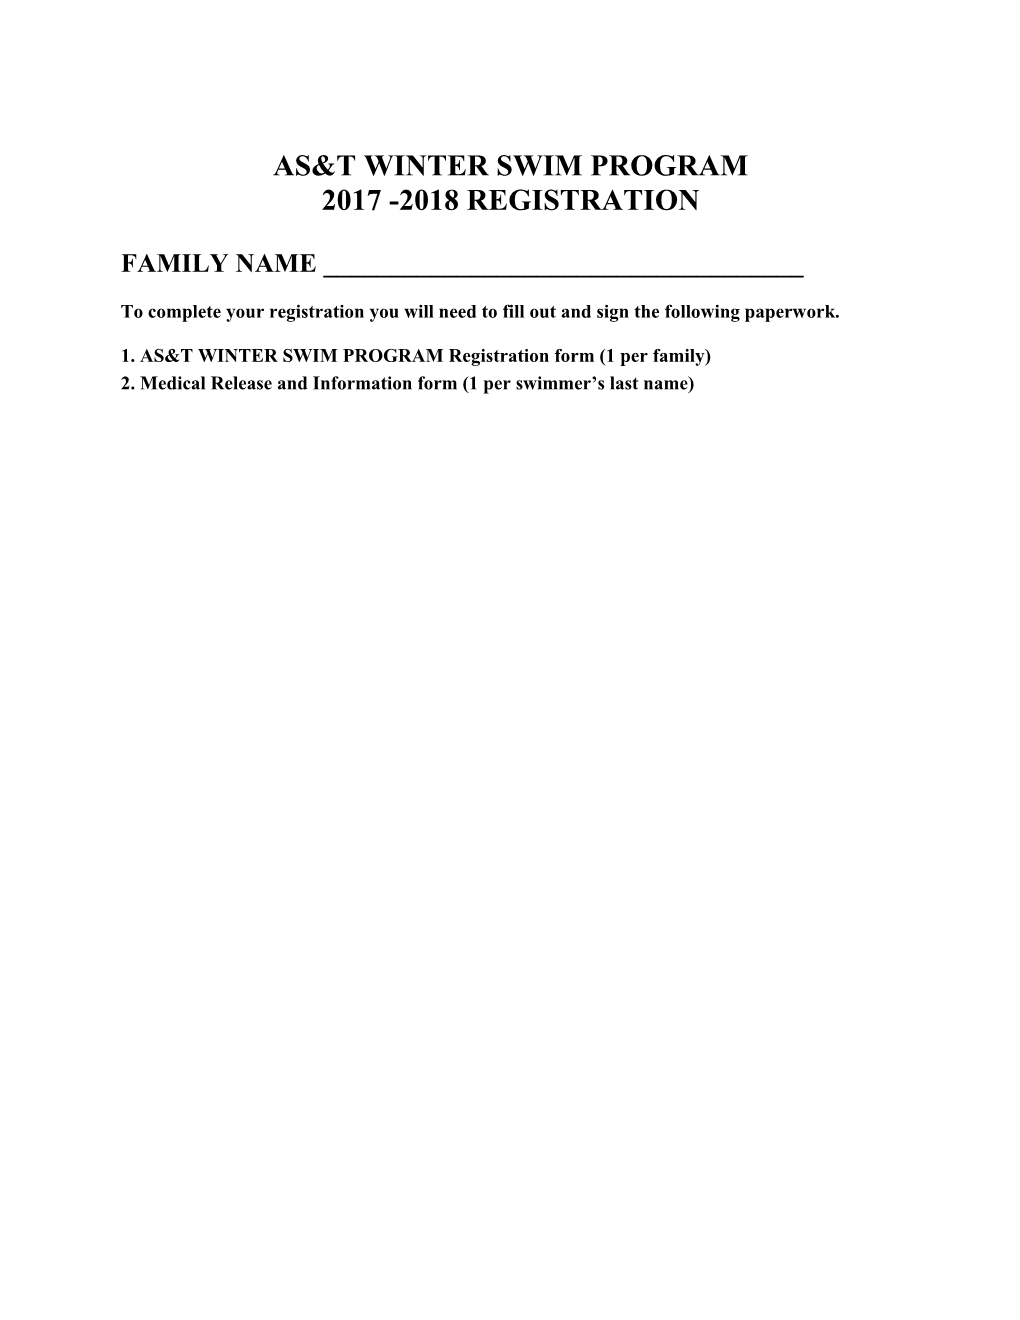 1. AS&T WINTER SWIM PROGRAM Registration Form (1 Per Family)